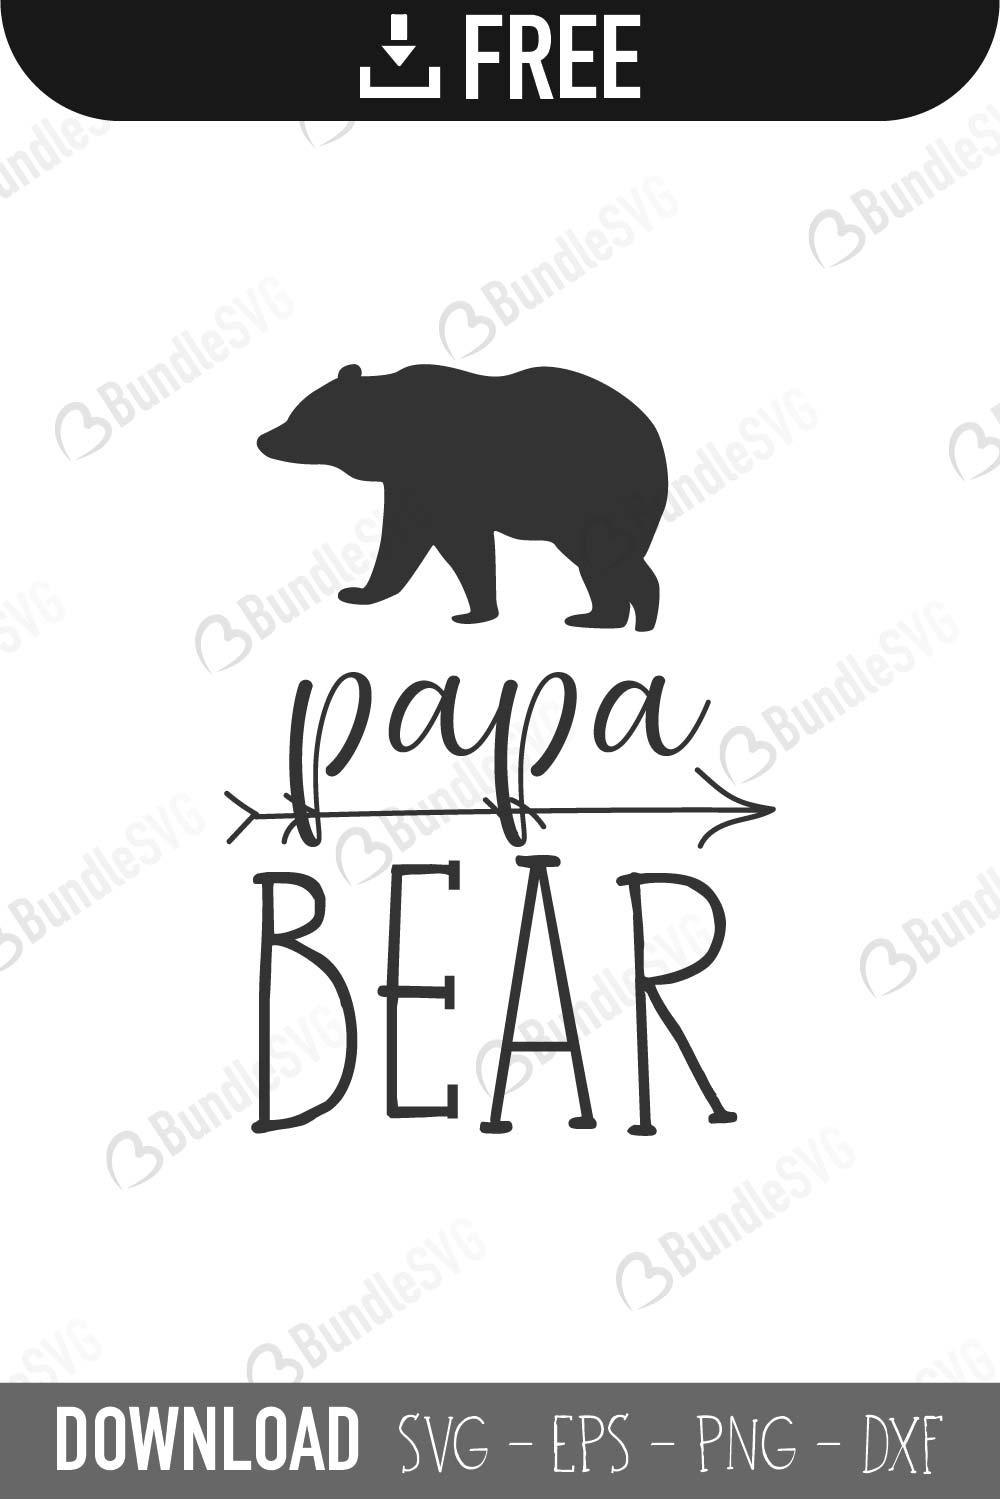 Papa Bear SVG Cut Files Free Download | BundleSVG